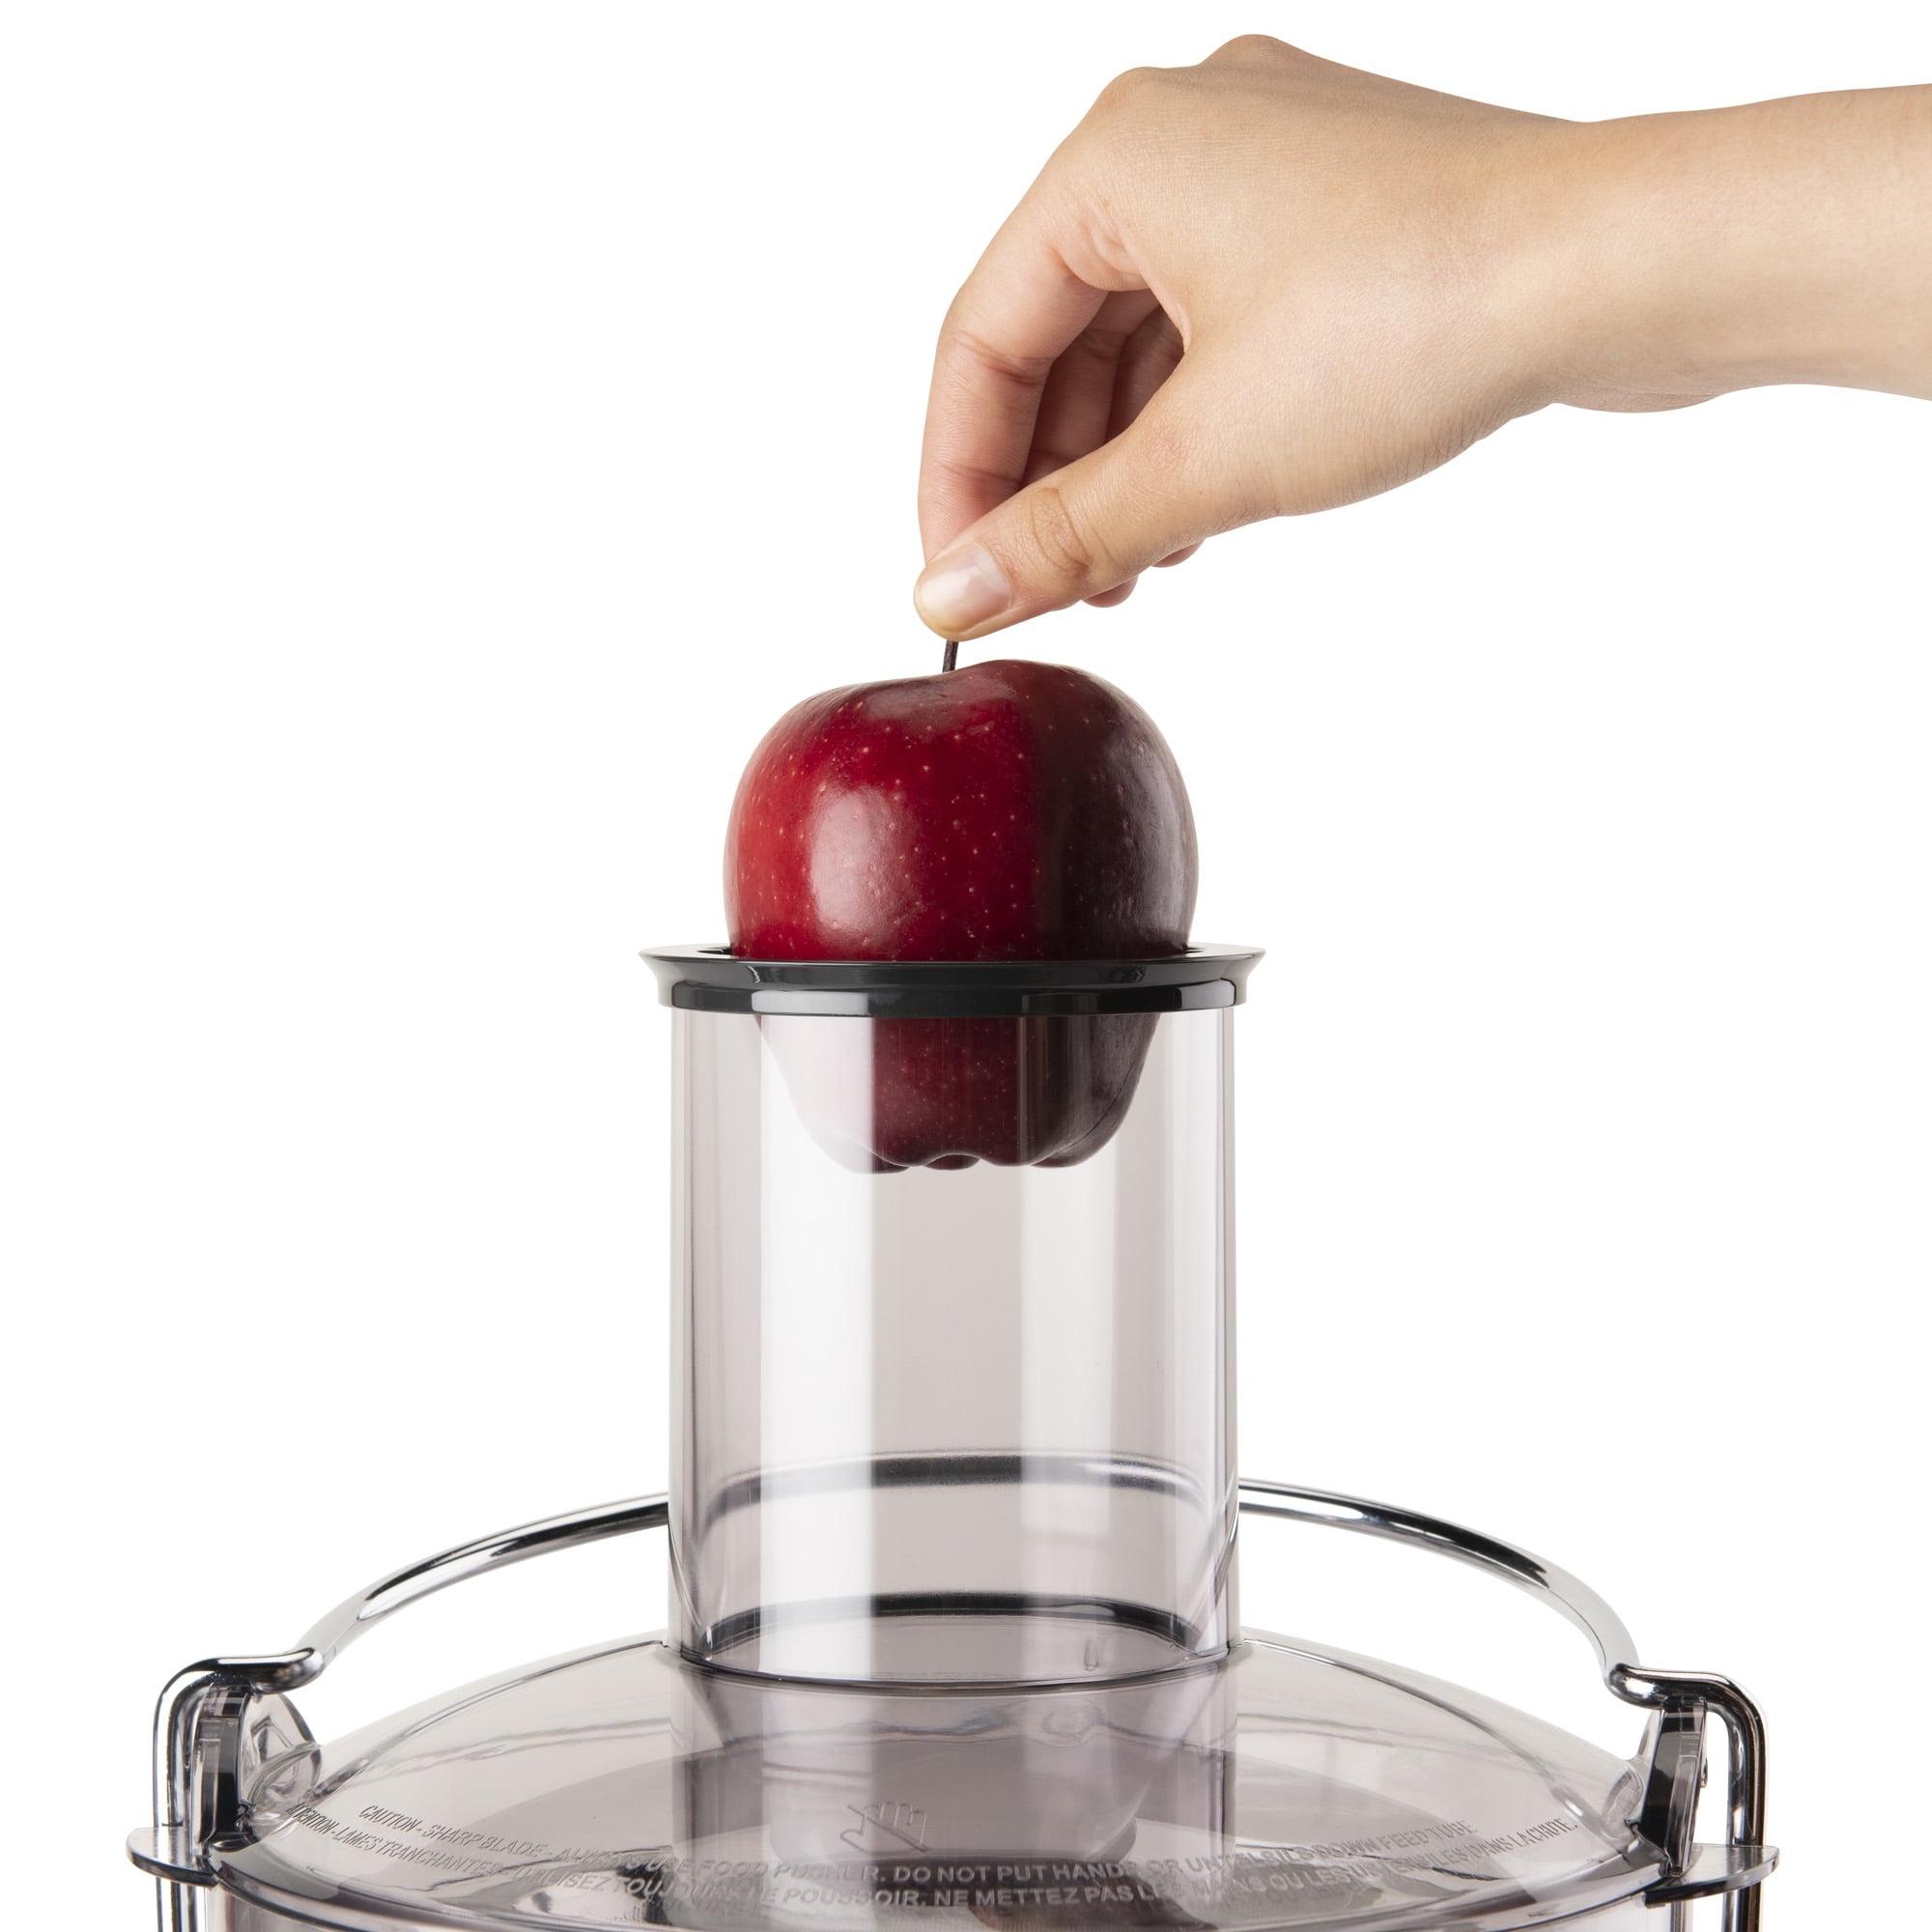 NutriBullet Juicer Pro Centrifugal Juicer Machine for Fruit, Vegetables,  and Food Prep, 27 Ounces/1.5 Liters, 1000 Watts, Silver, NBJ50200